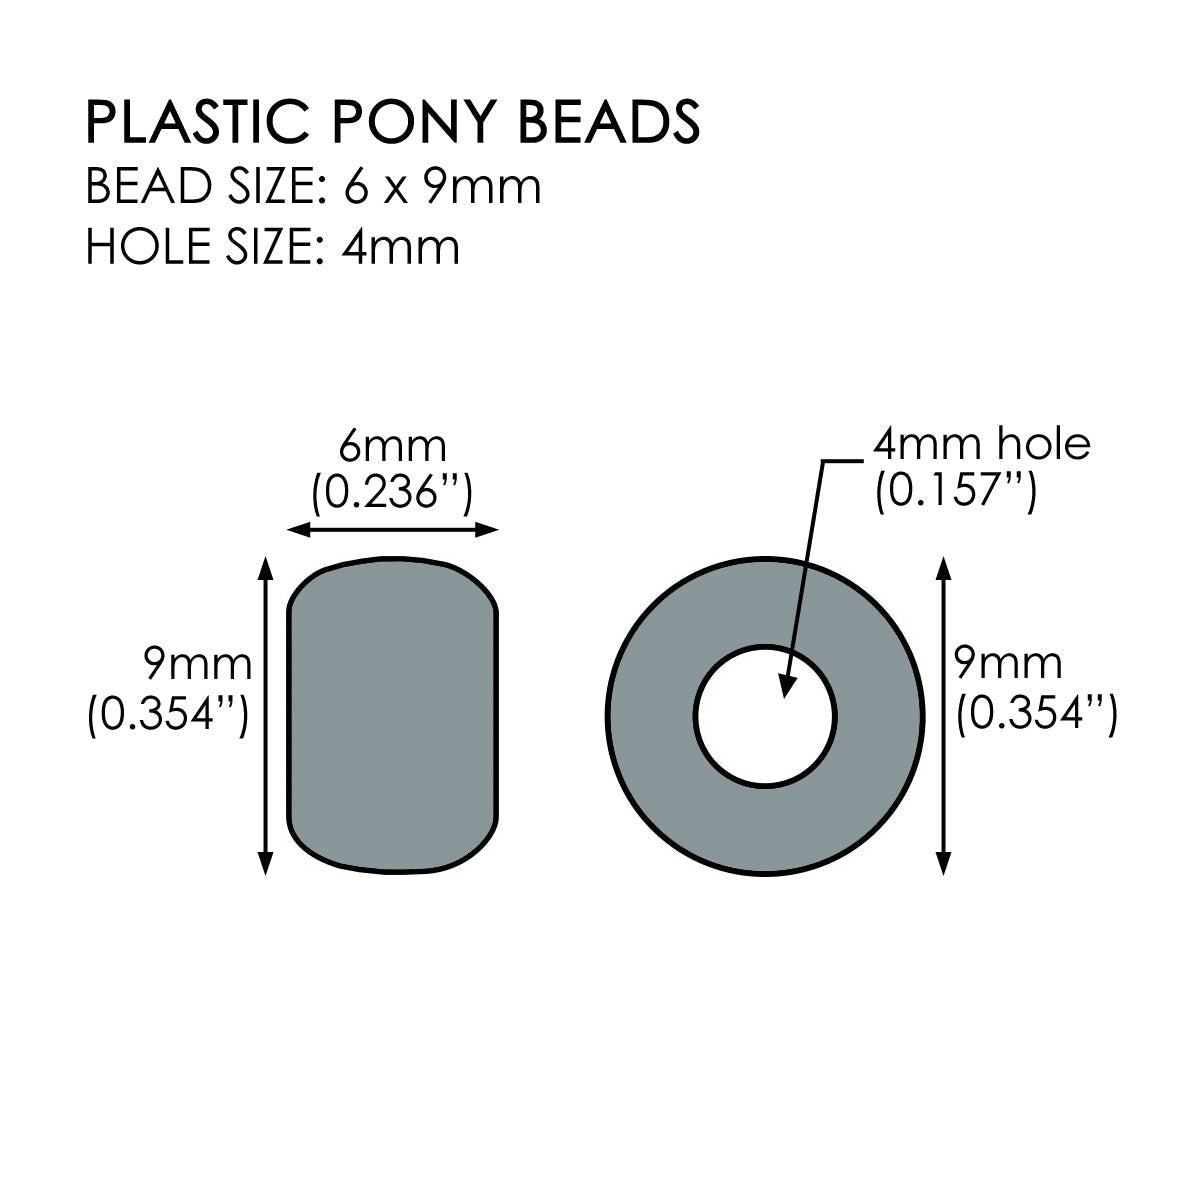 Diagram of pony bead dimensions